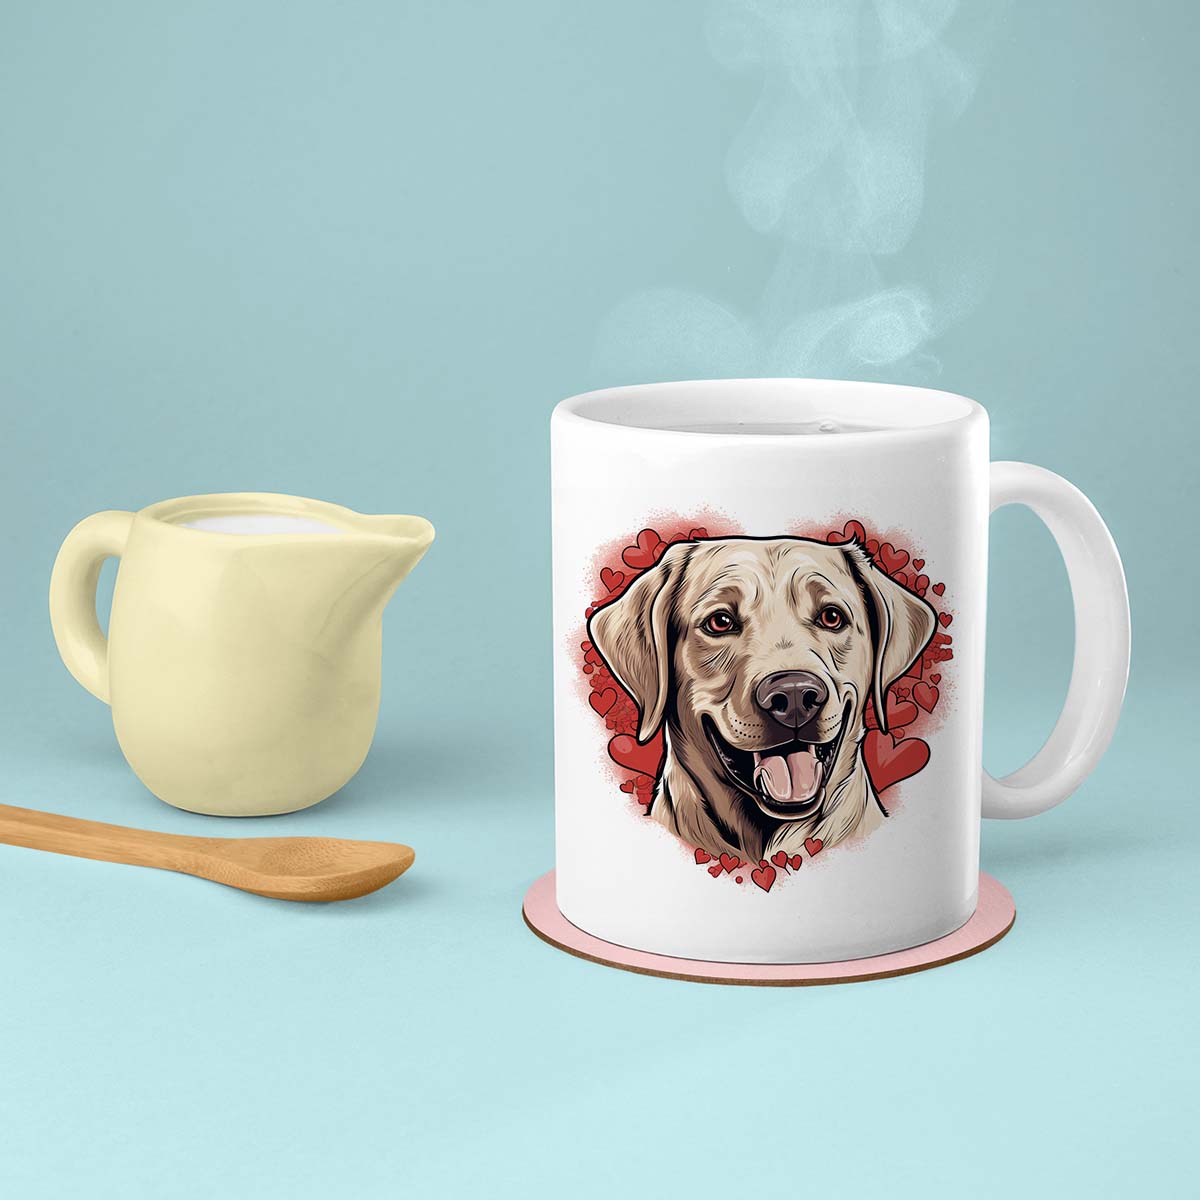 Custom Valentine's Day Dog Mug, Personalized Valentine's Day Gift for Dog Lover, Cute Labrador Retriever Love Ceramic Mug, Dog Coffee Mugs, Personalized Pet Mugs, Cute Valentine Puppy Heart Ceramic Mug, Valentines Gift